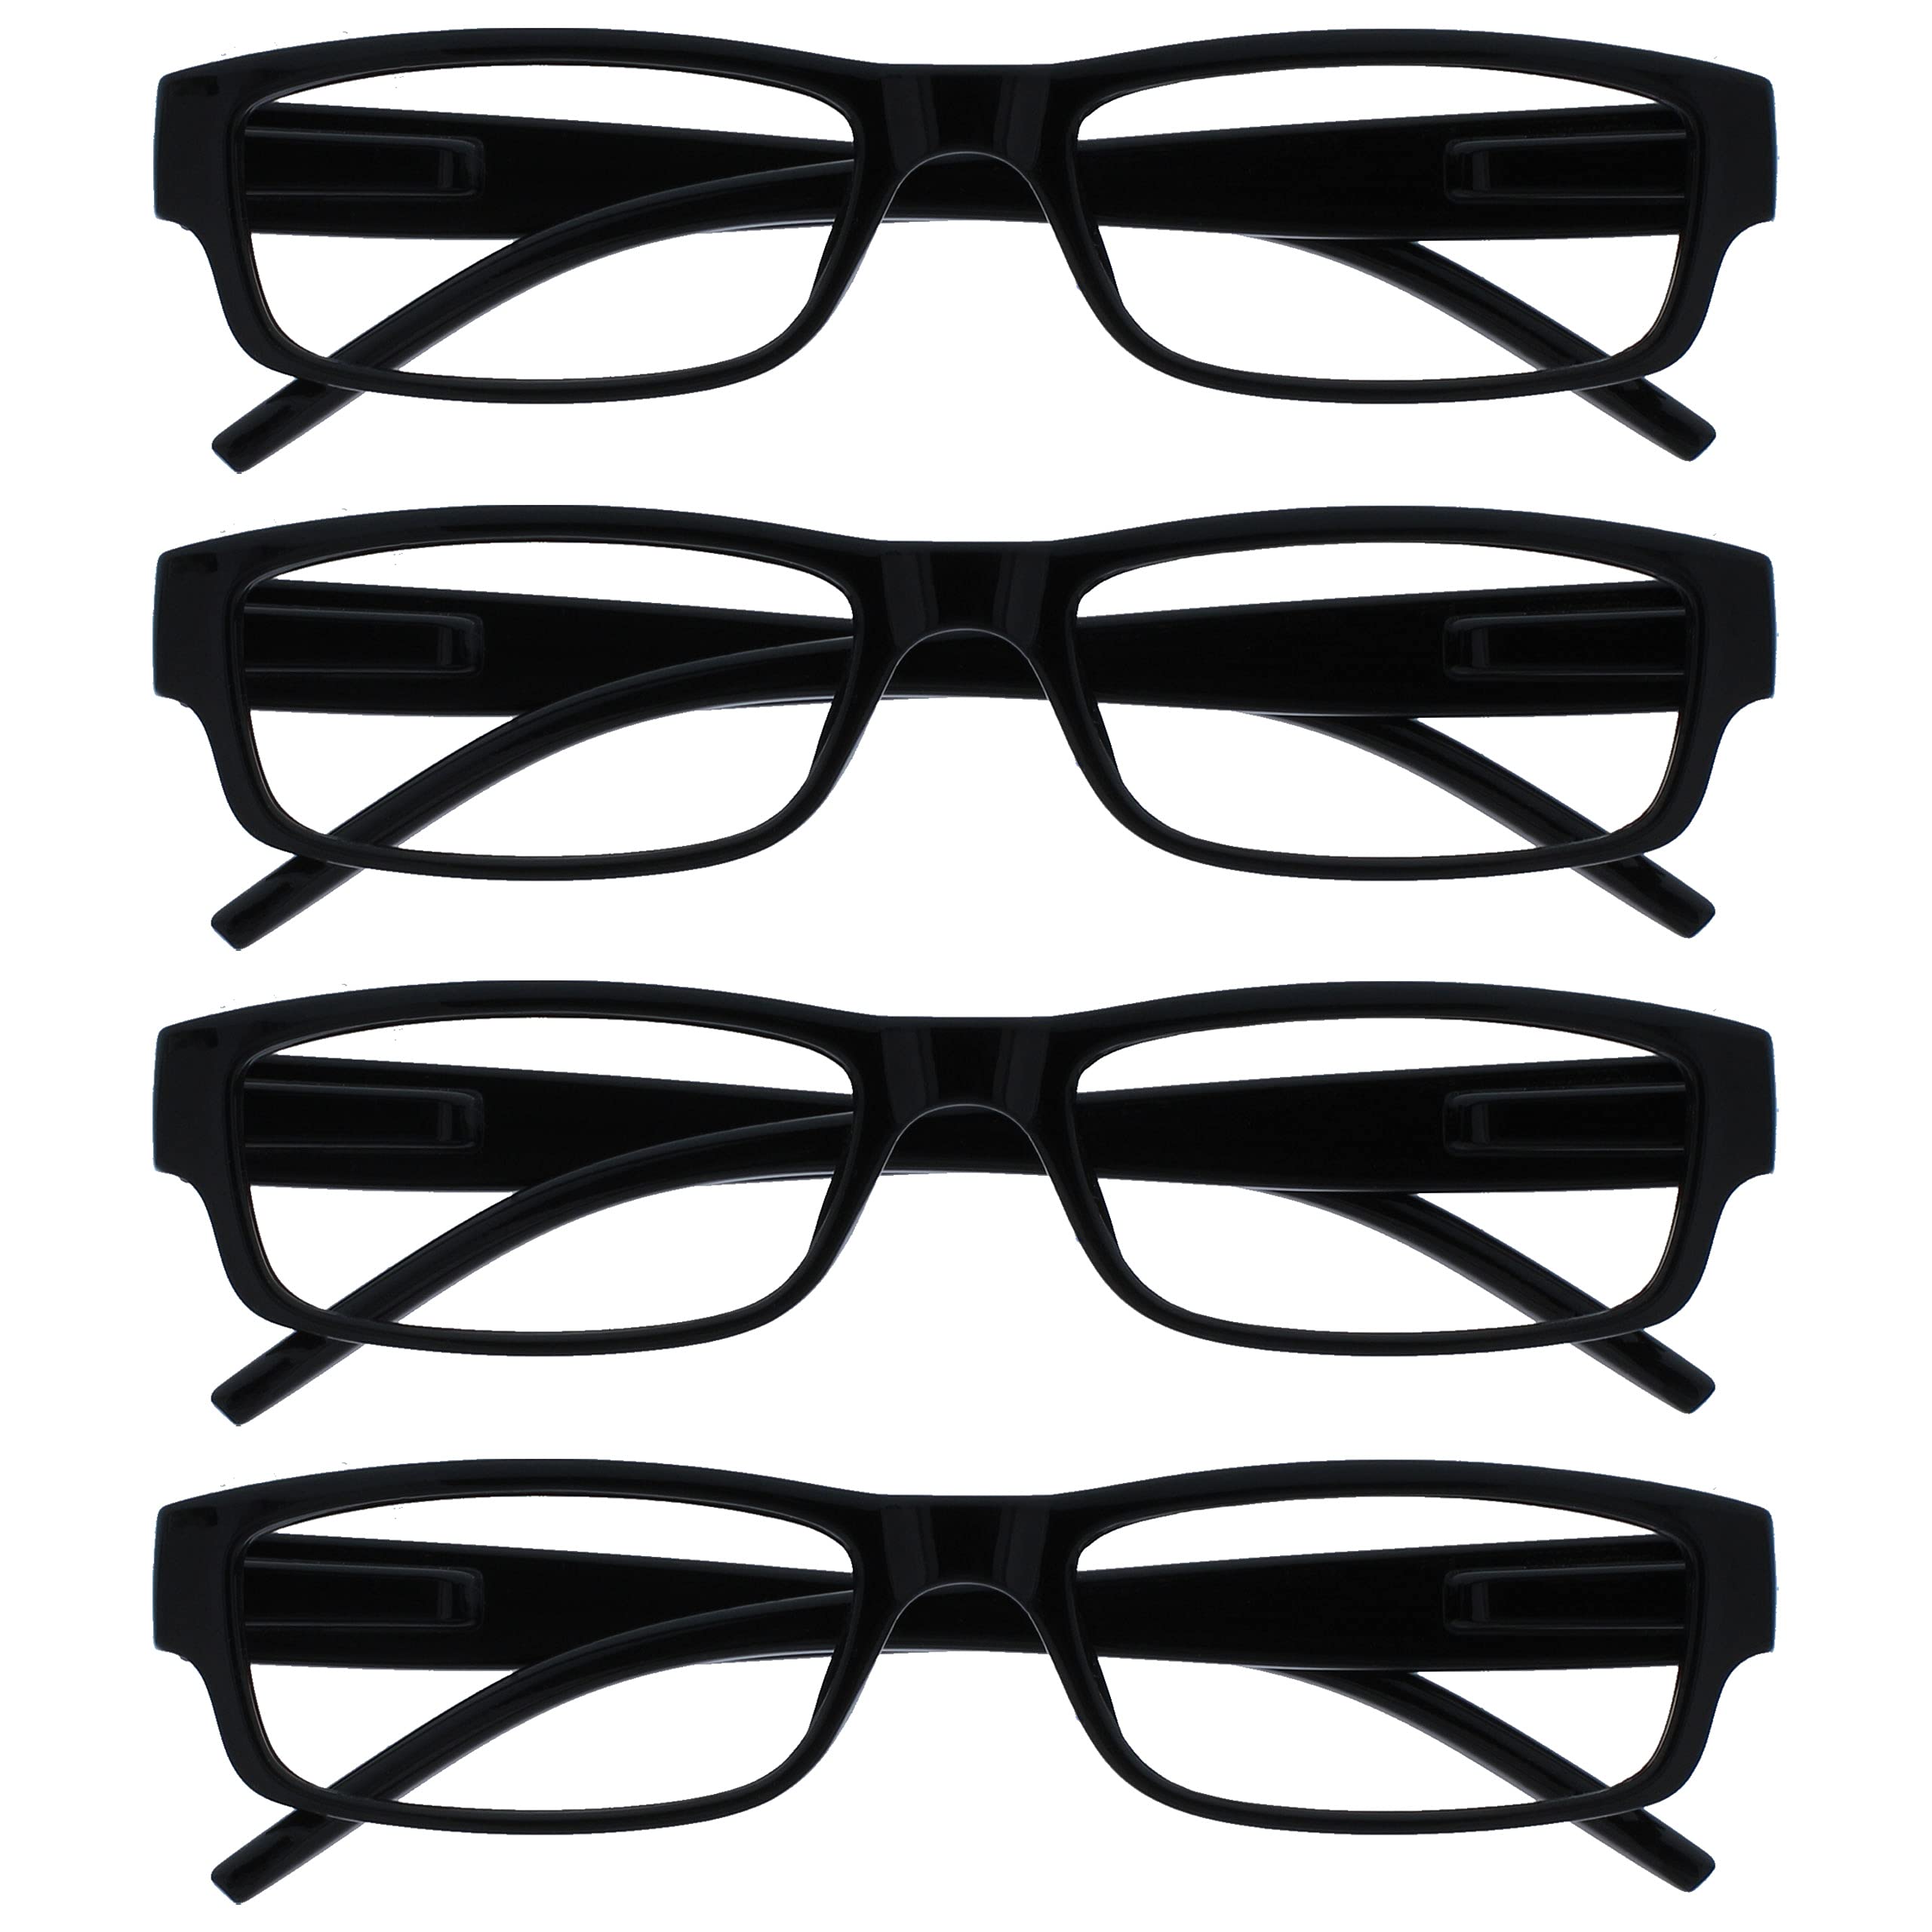 The Reading Glasses Company Black Lightweight Comfortable Readers Value 4 Pack Designer Style Mens Womens UVR4PK032 +2.00